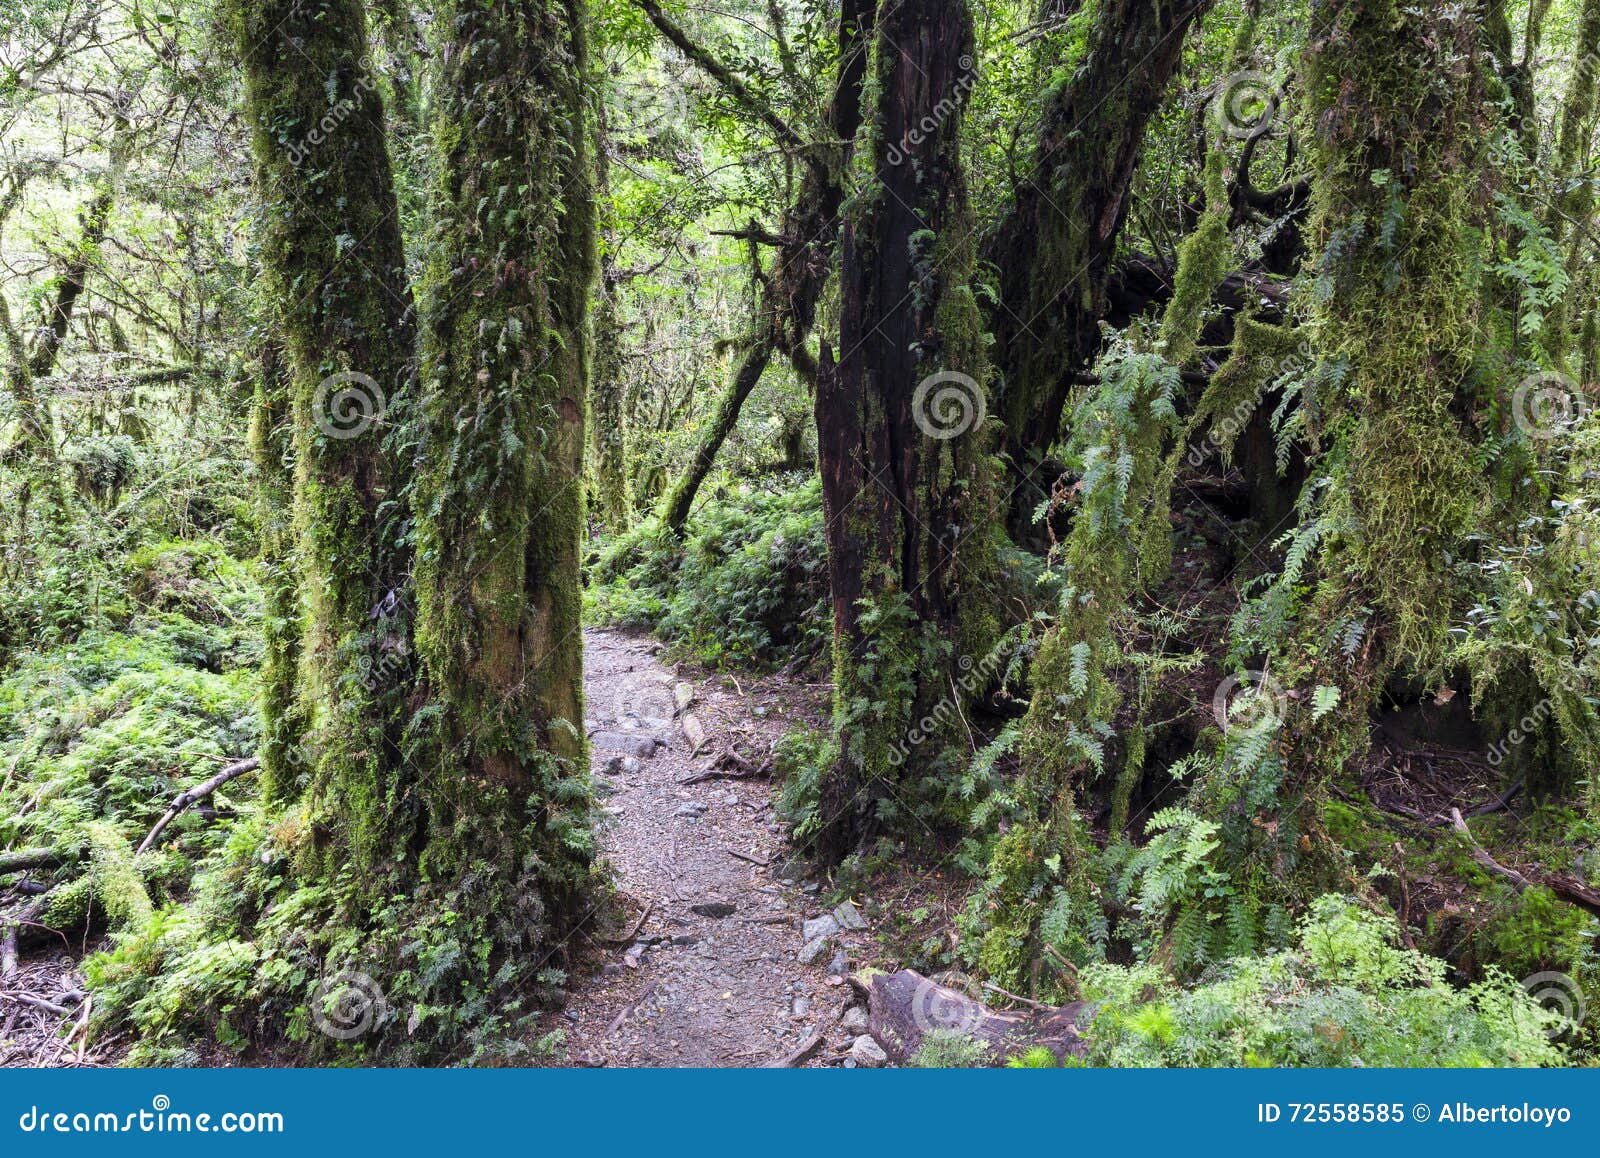 enchanted forest, queulat national park (chile)